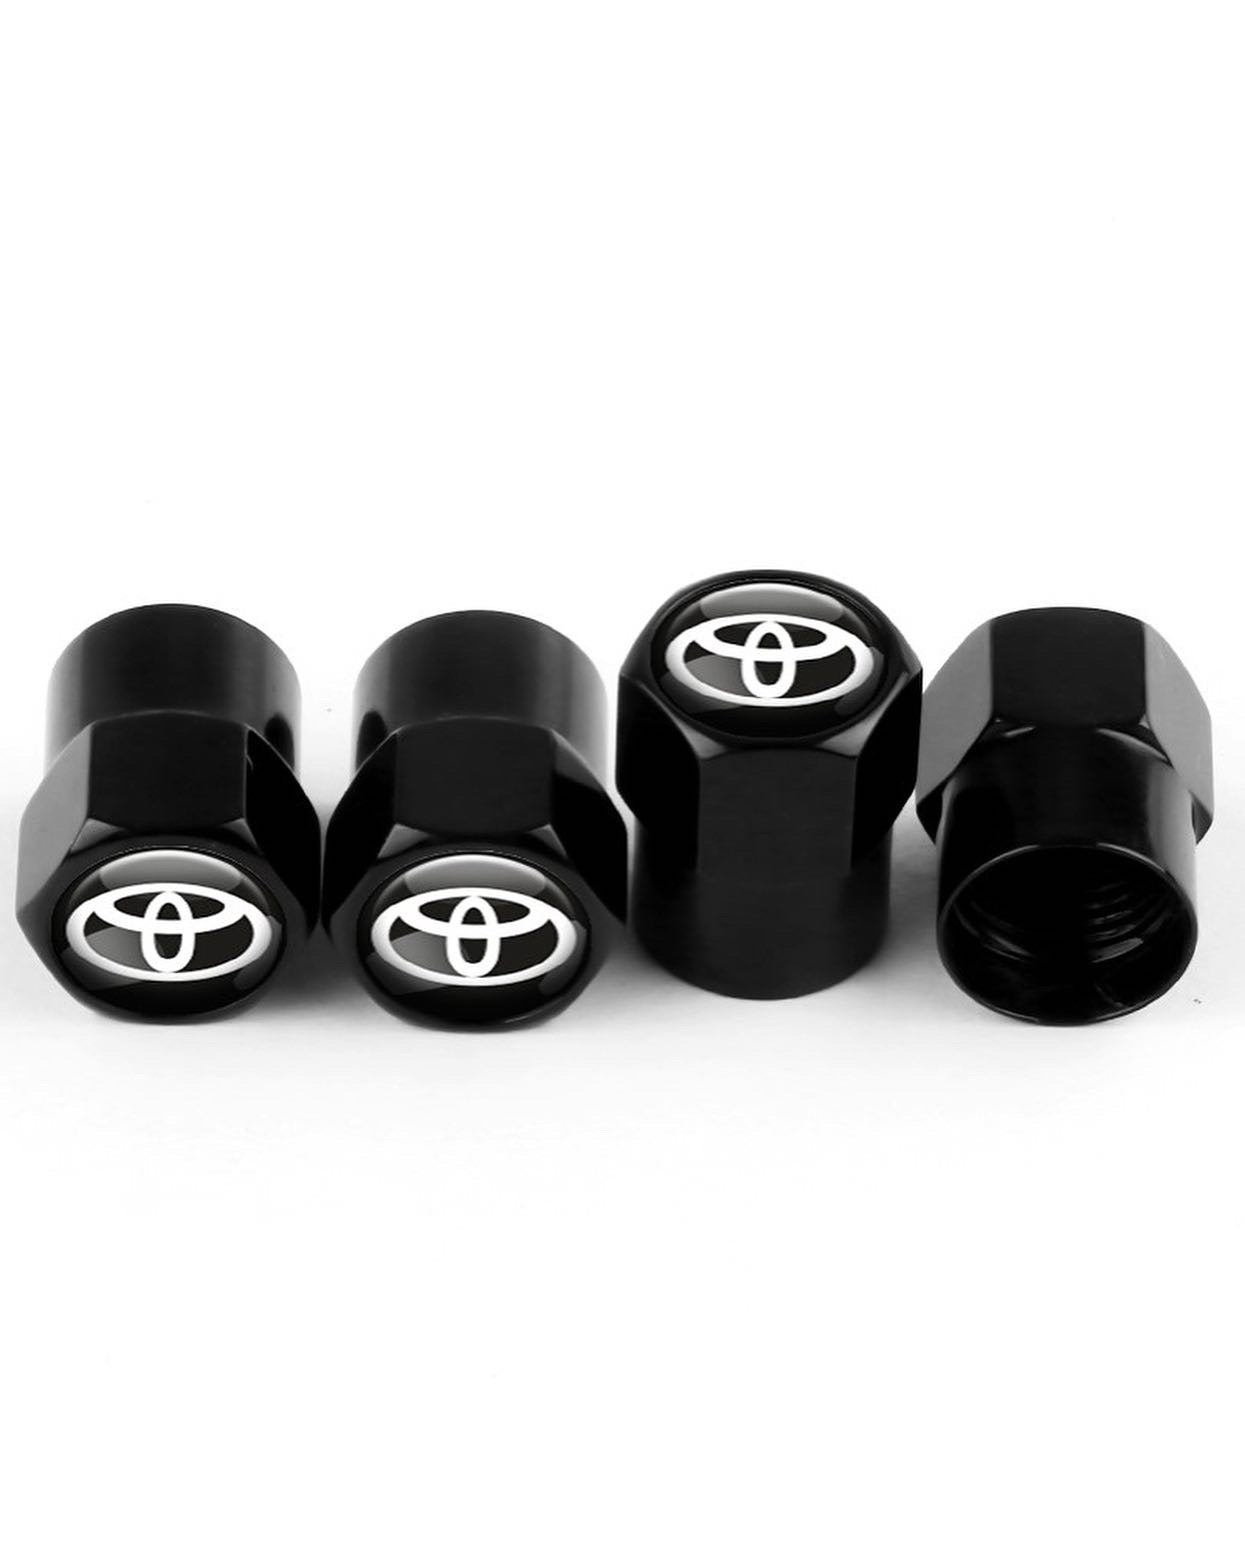 Toyota Valve Caps - Black